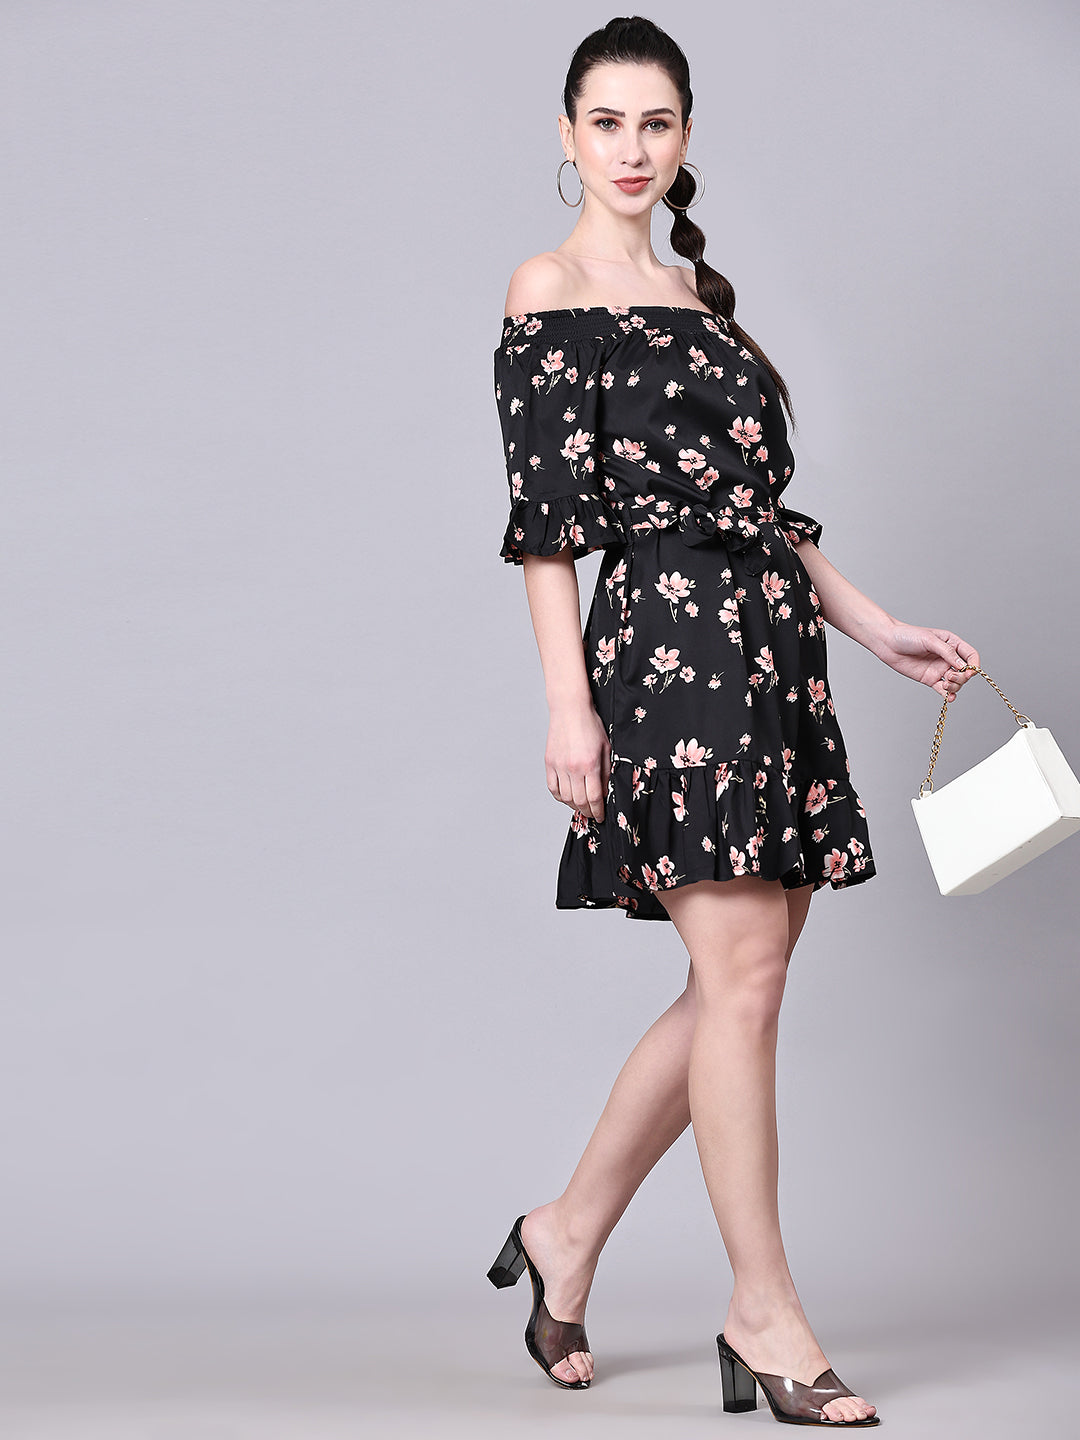 Pomegal Black Floral Printed Smocked Mini Dress